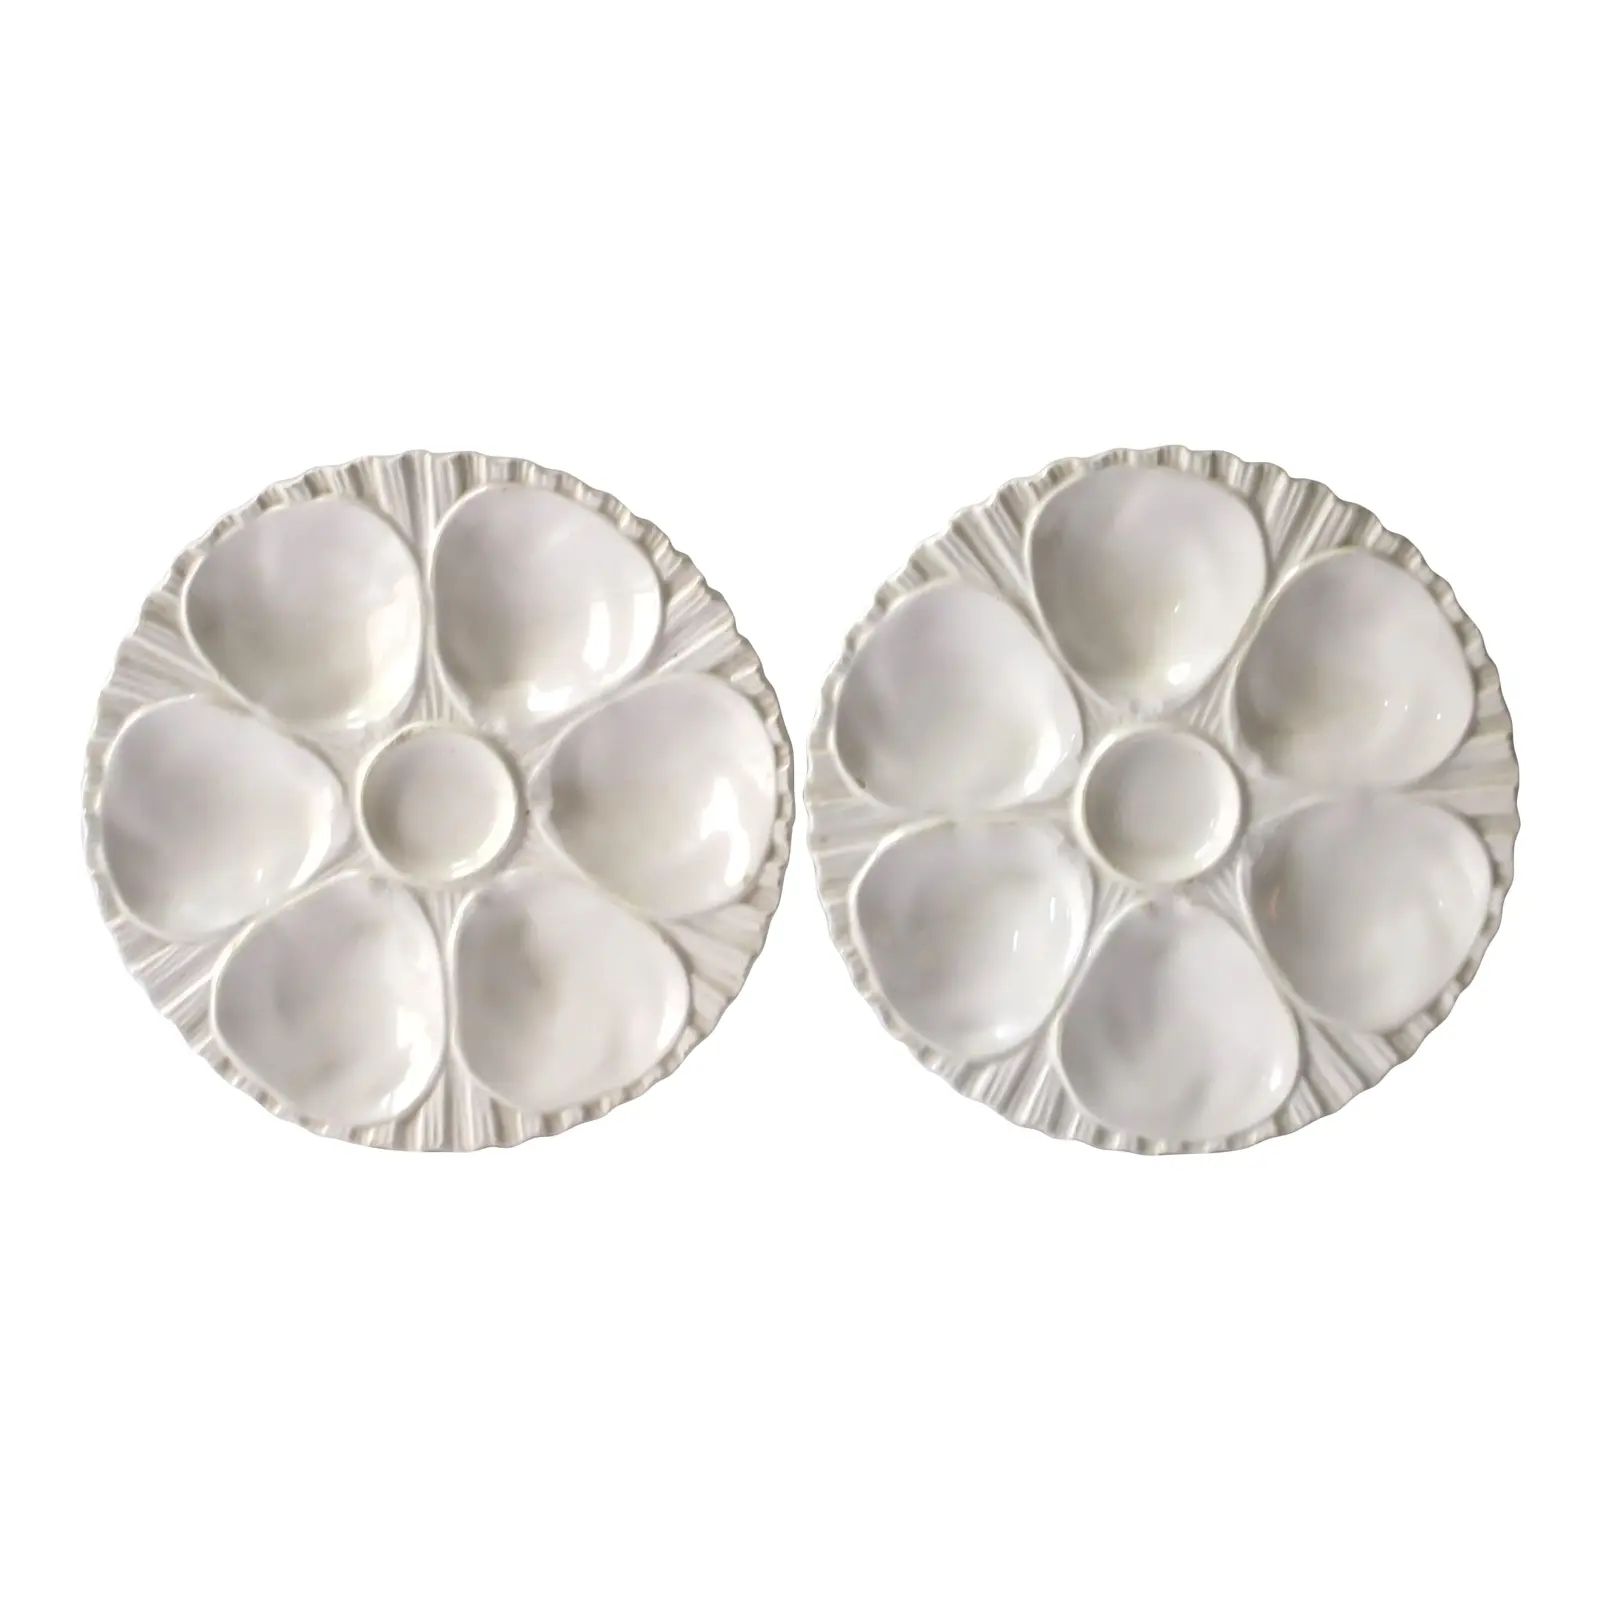 White Oyster Plates, Pair | Chairish